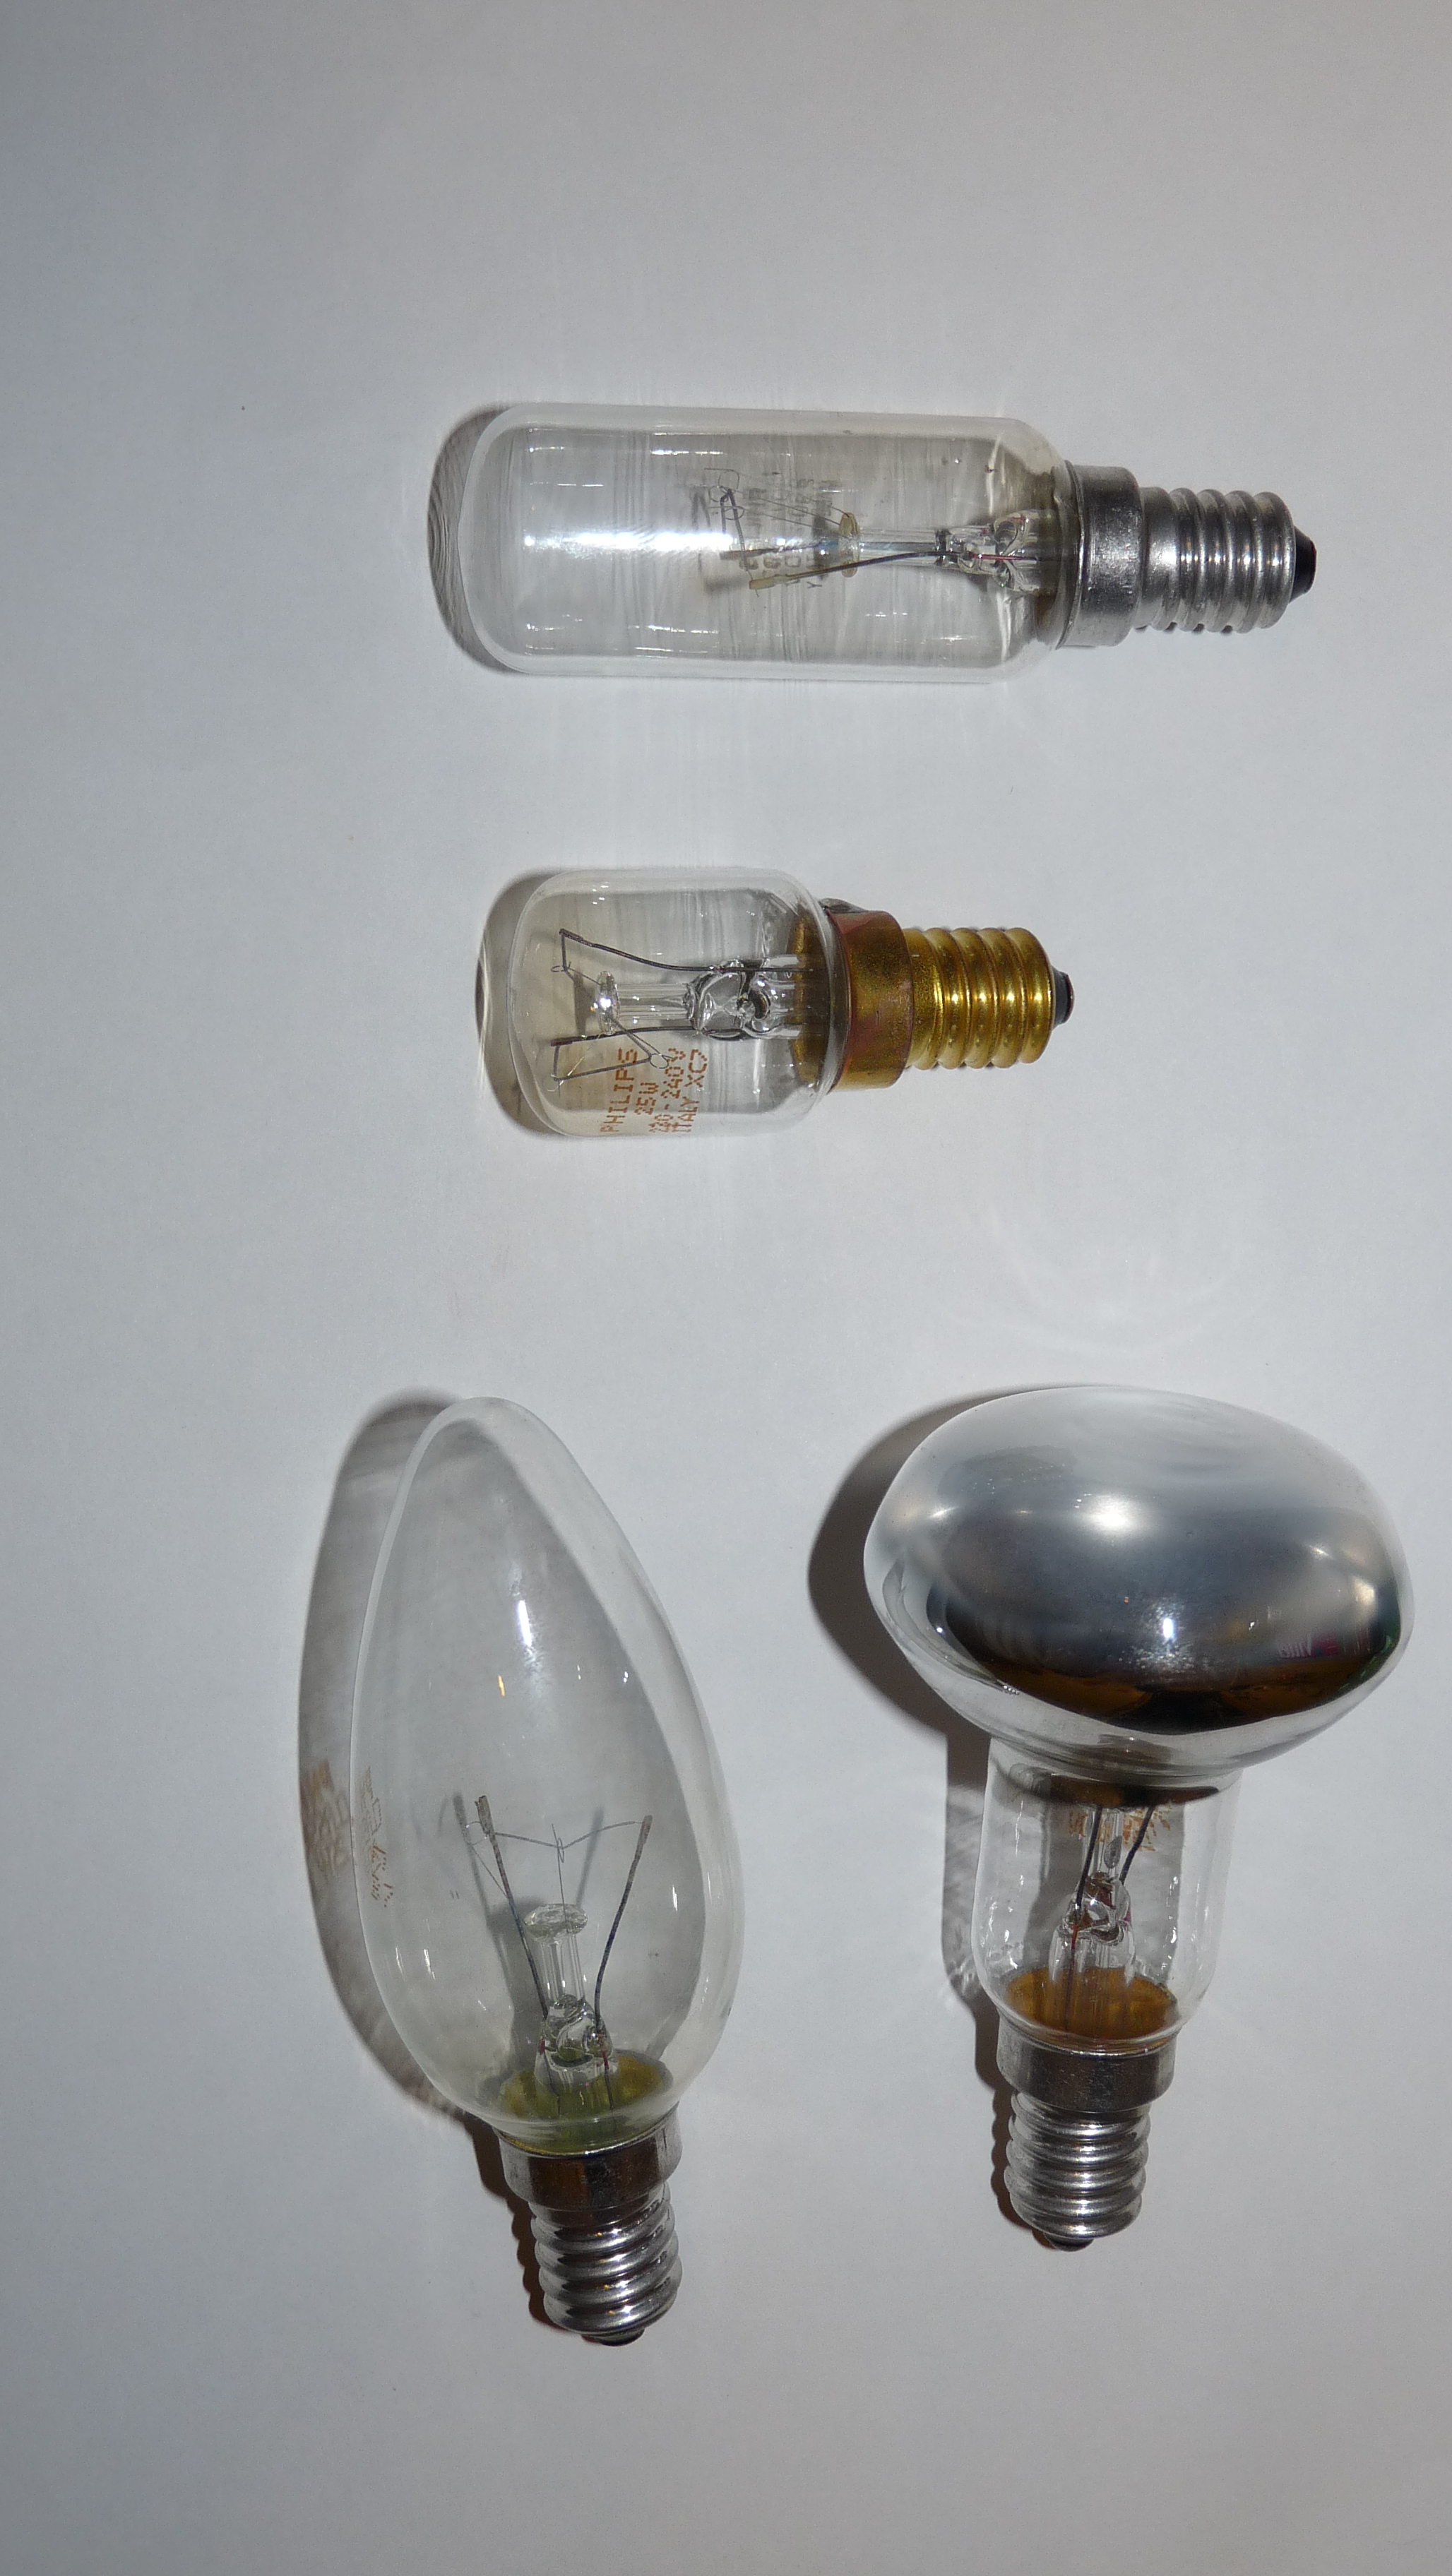 Philips light bulbs with Edison screw